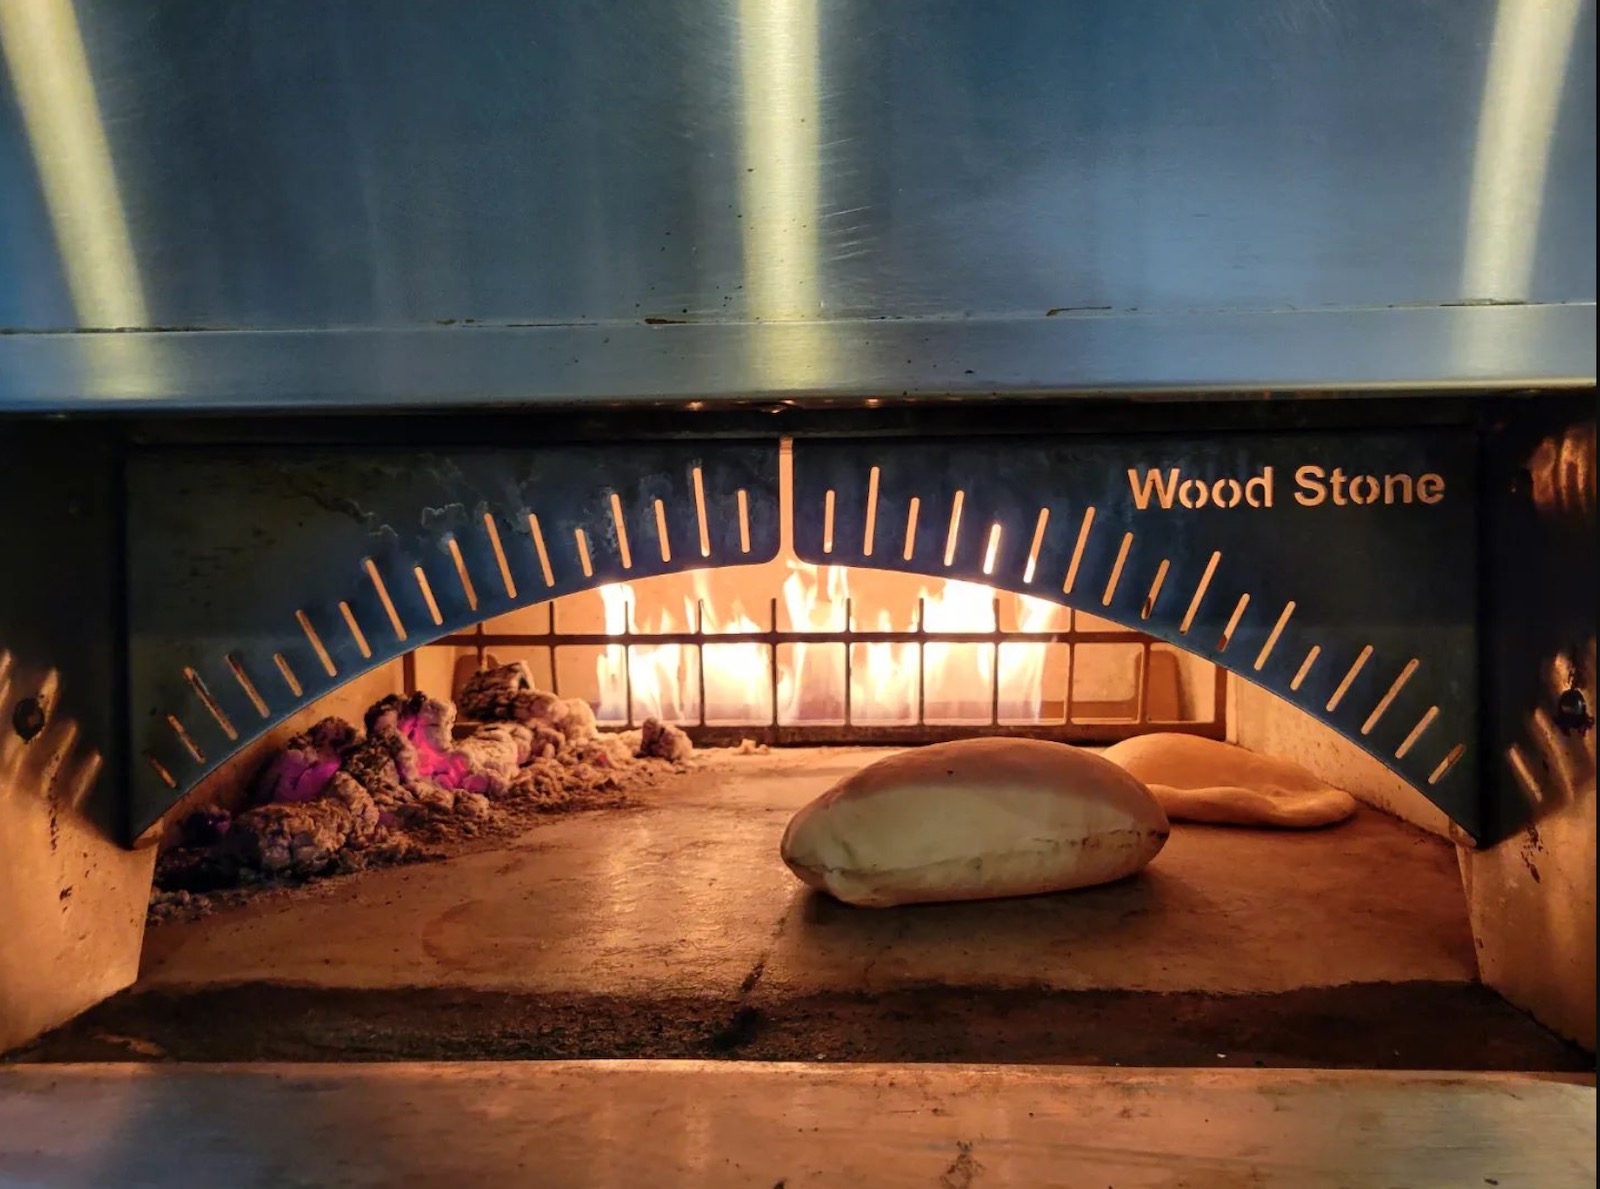 Wood Stone Oven